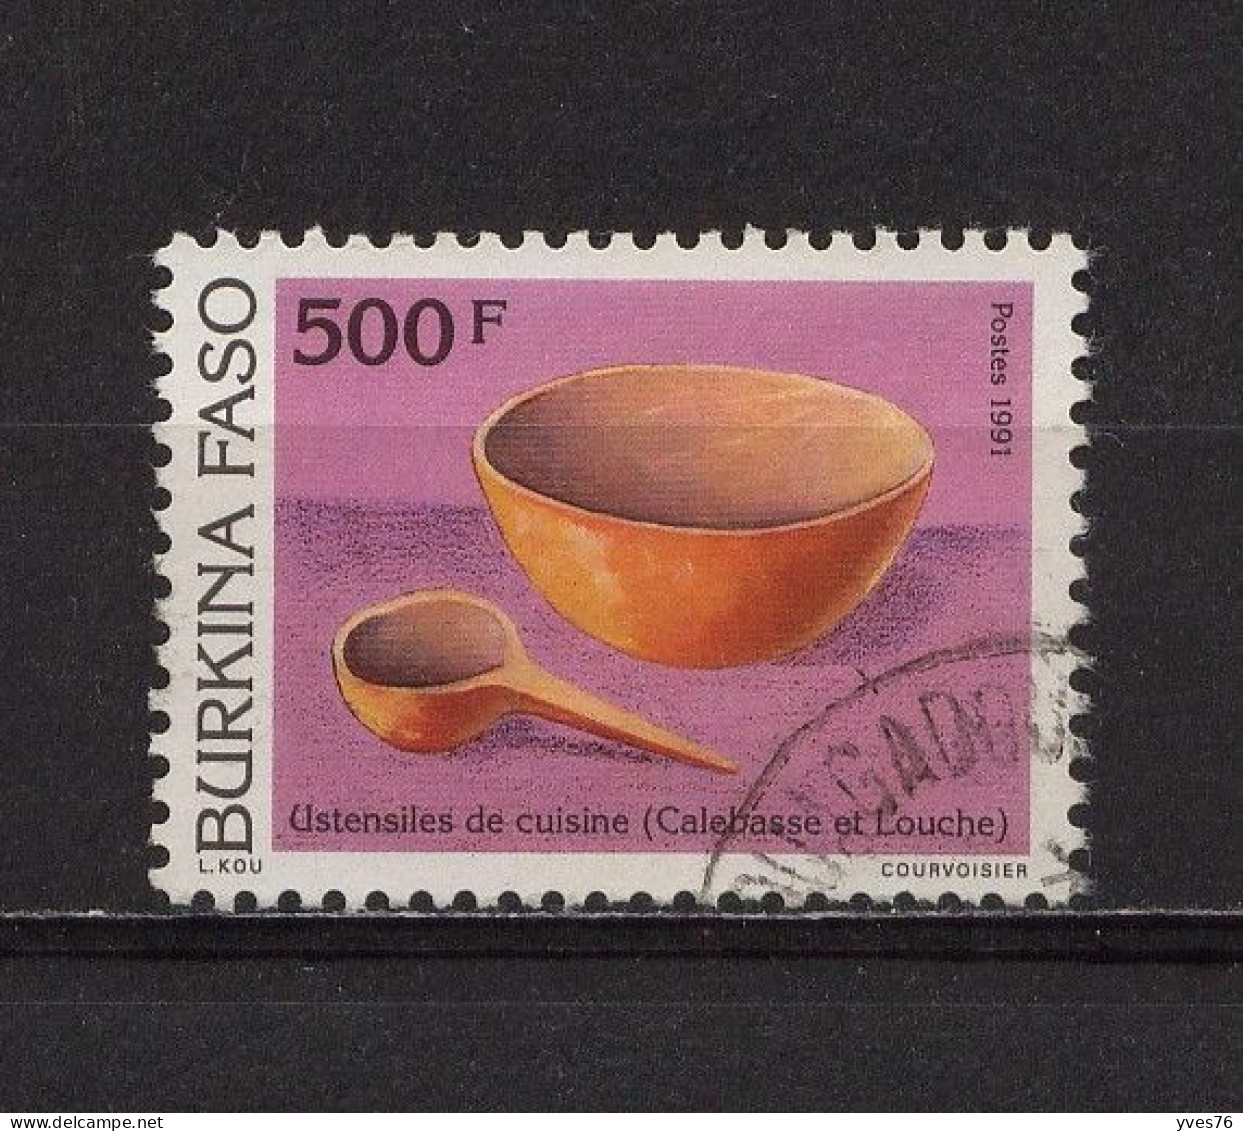 BURKINA FASO - Y&T N° 852° - Ustensiles De Cuisine - Burkina Faso (1984-...)